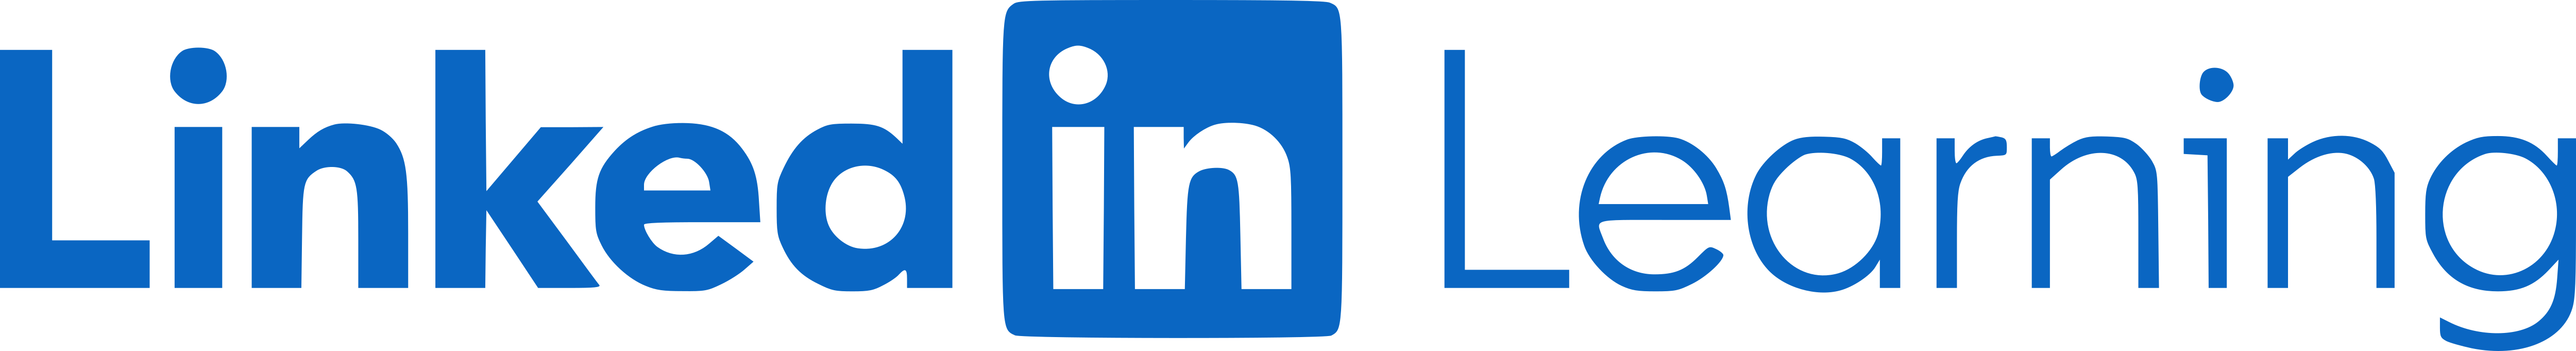 LinkedIn_Learning_Logo.png